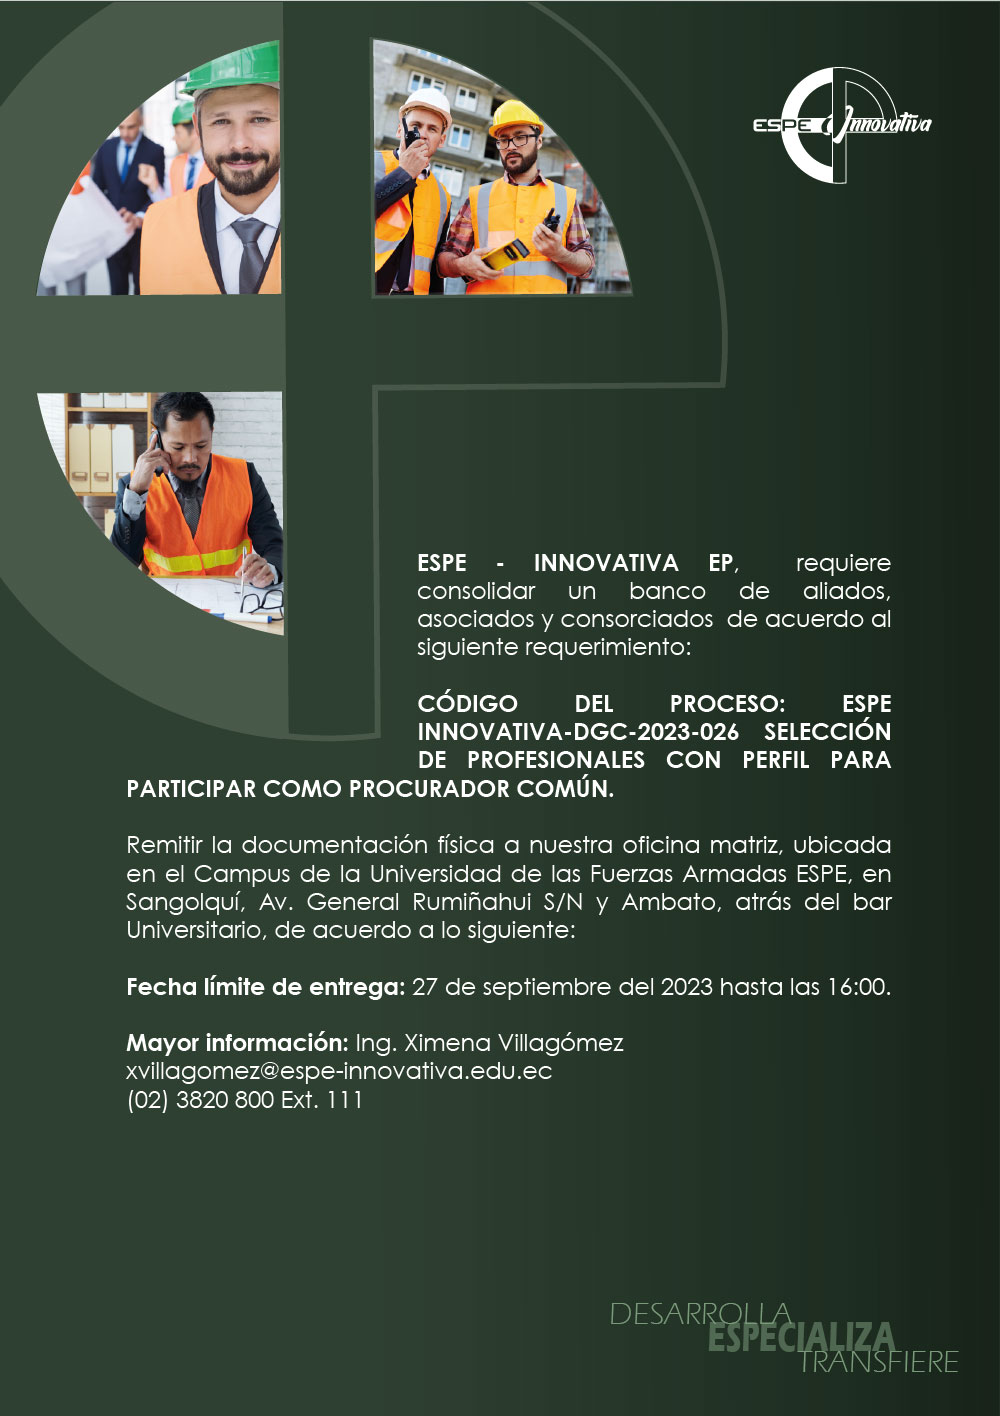 CÓDIGO DE PROCESO: ESPE-INNOVATIVA-DGC-2023-026   PROFESIONALES PROCURADOR COMÚN